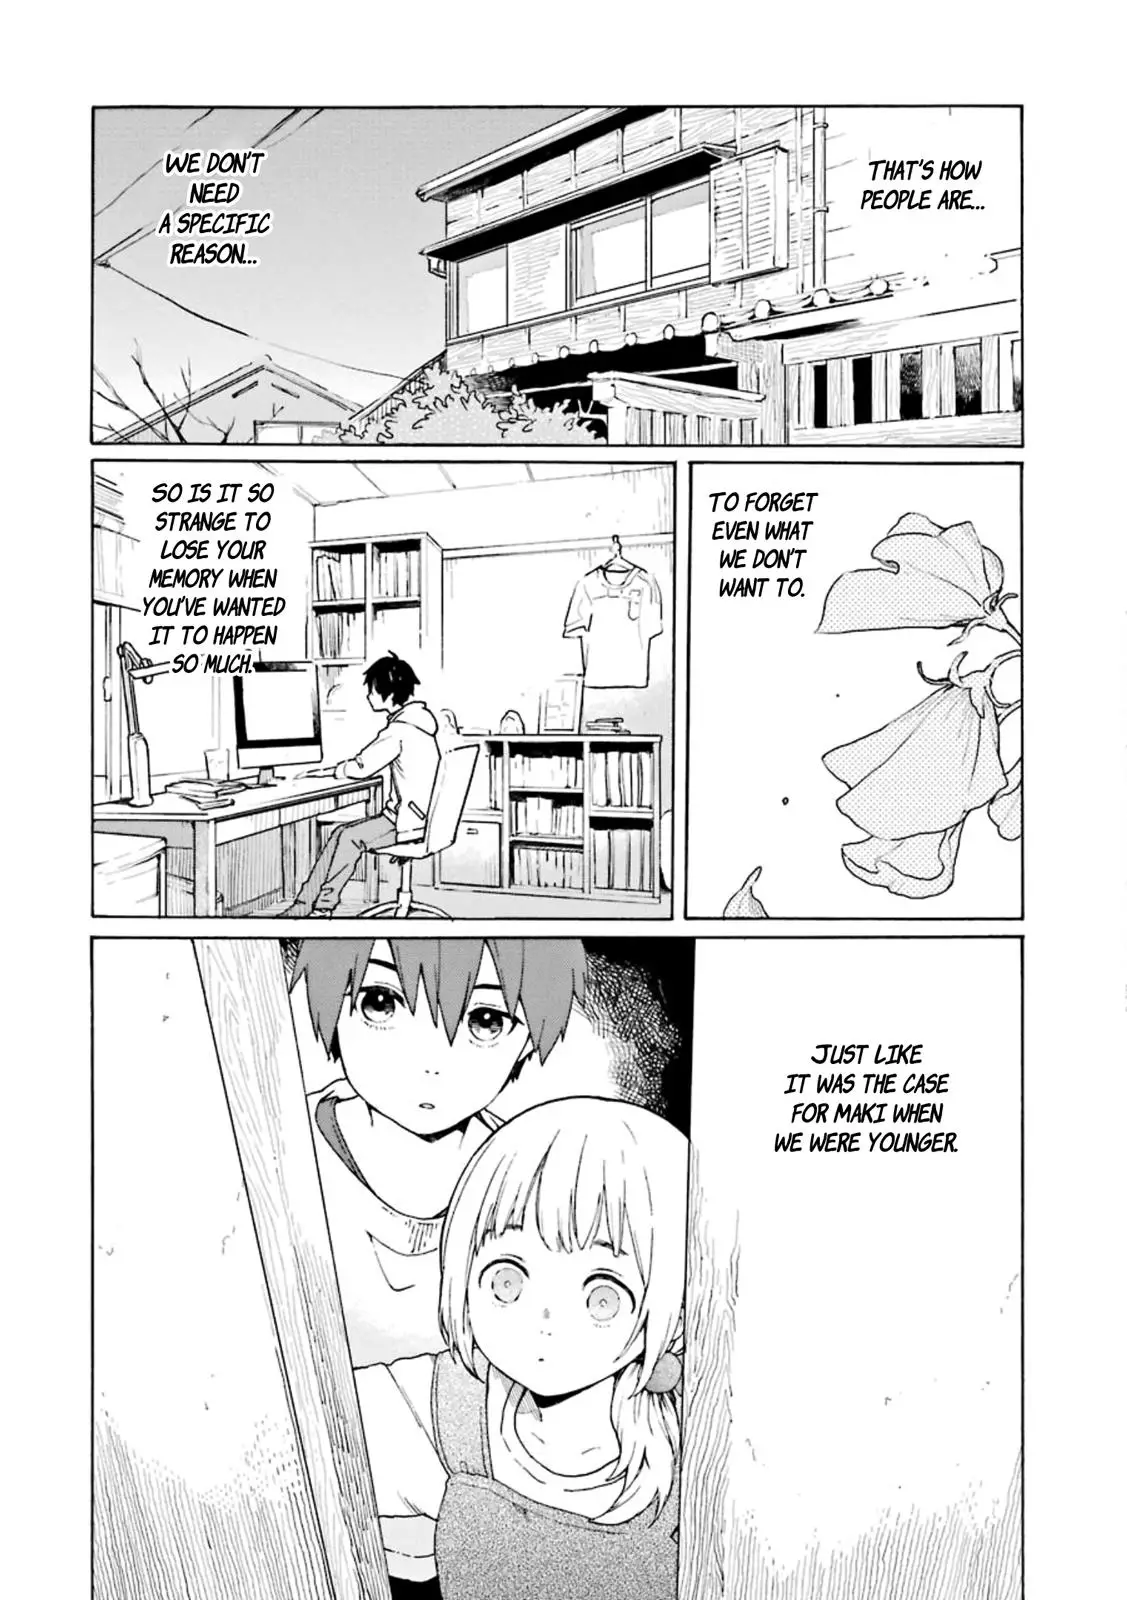 Kiokuya - 1 page 52-ee03f9e9